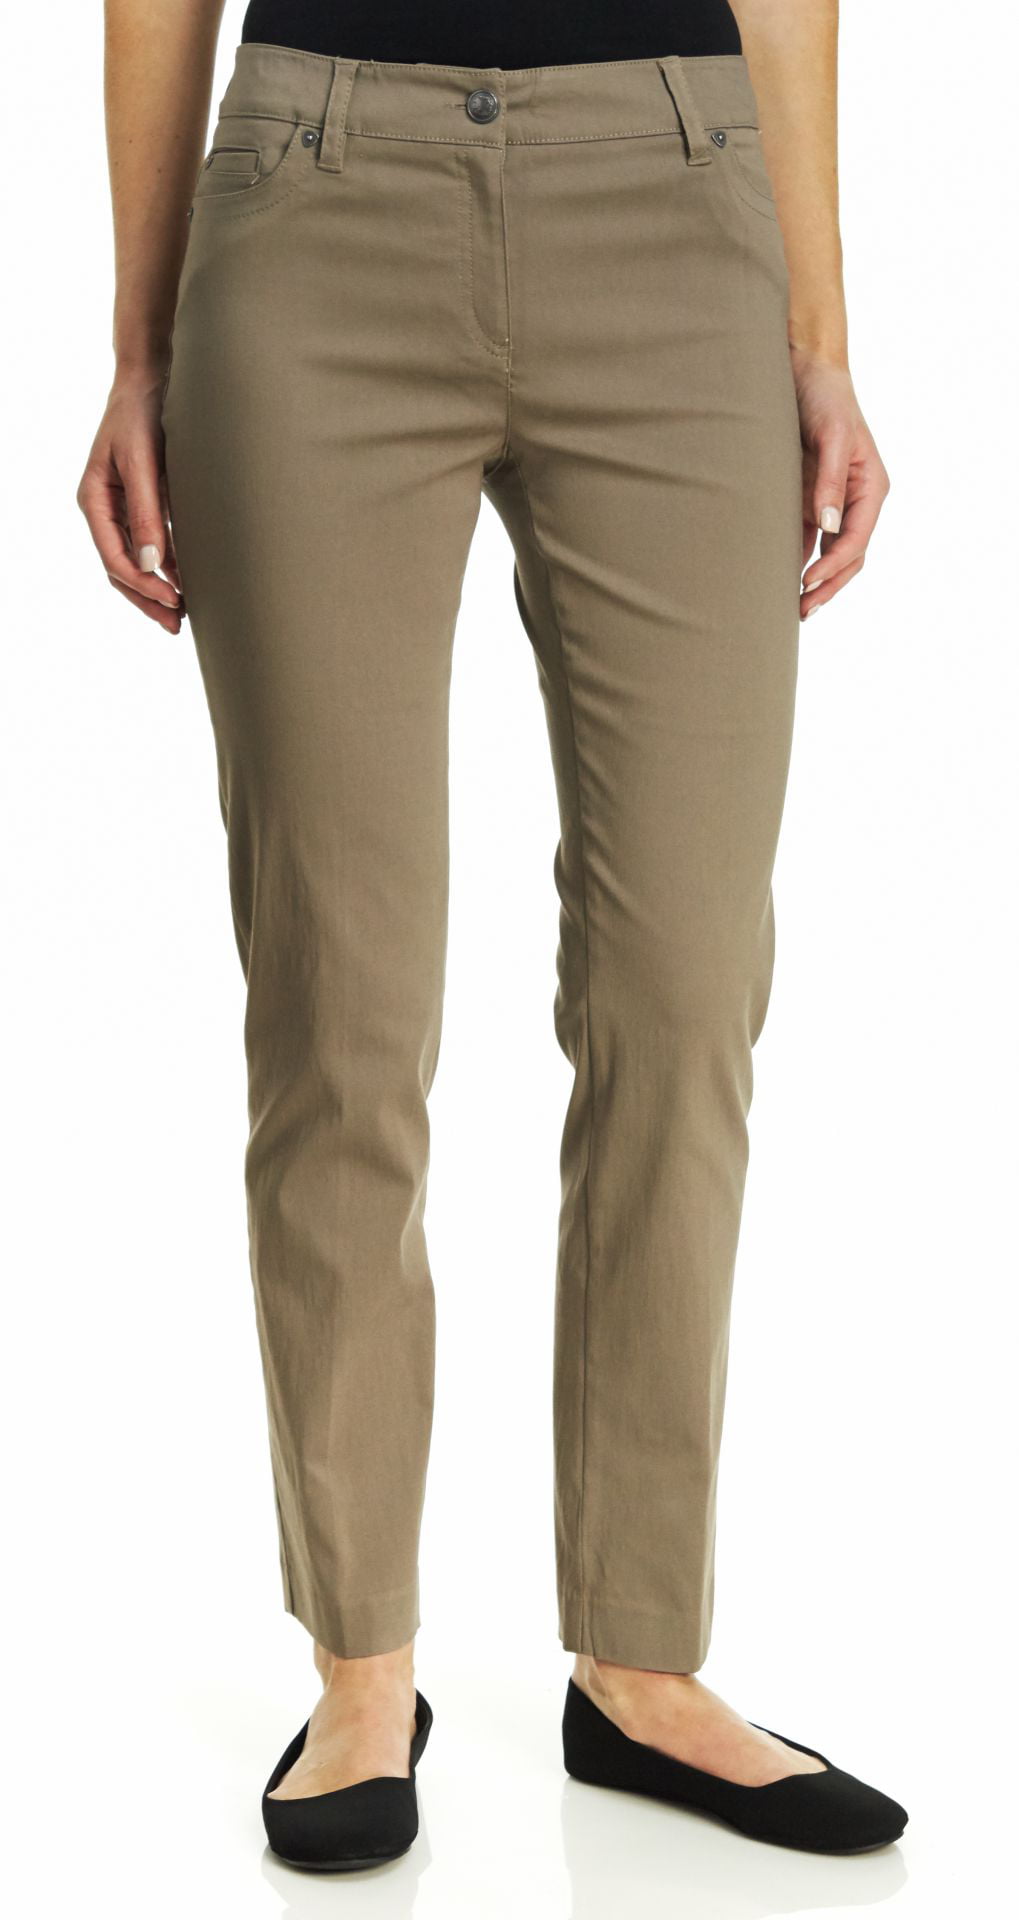 Zac & Rachel Women's Millenium Full Length Pants, Taupe, 6 - Walmart.com